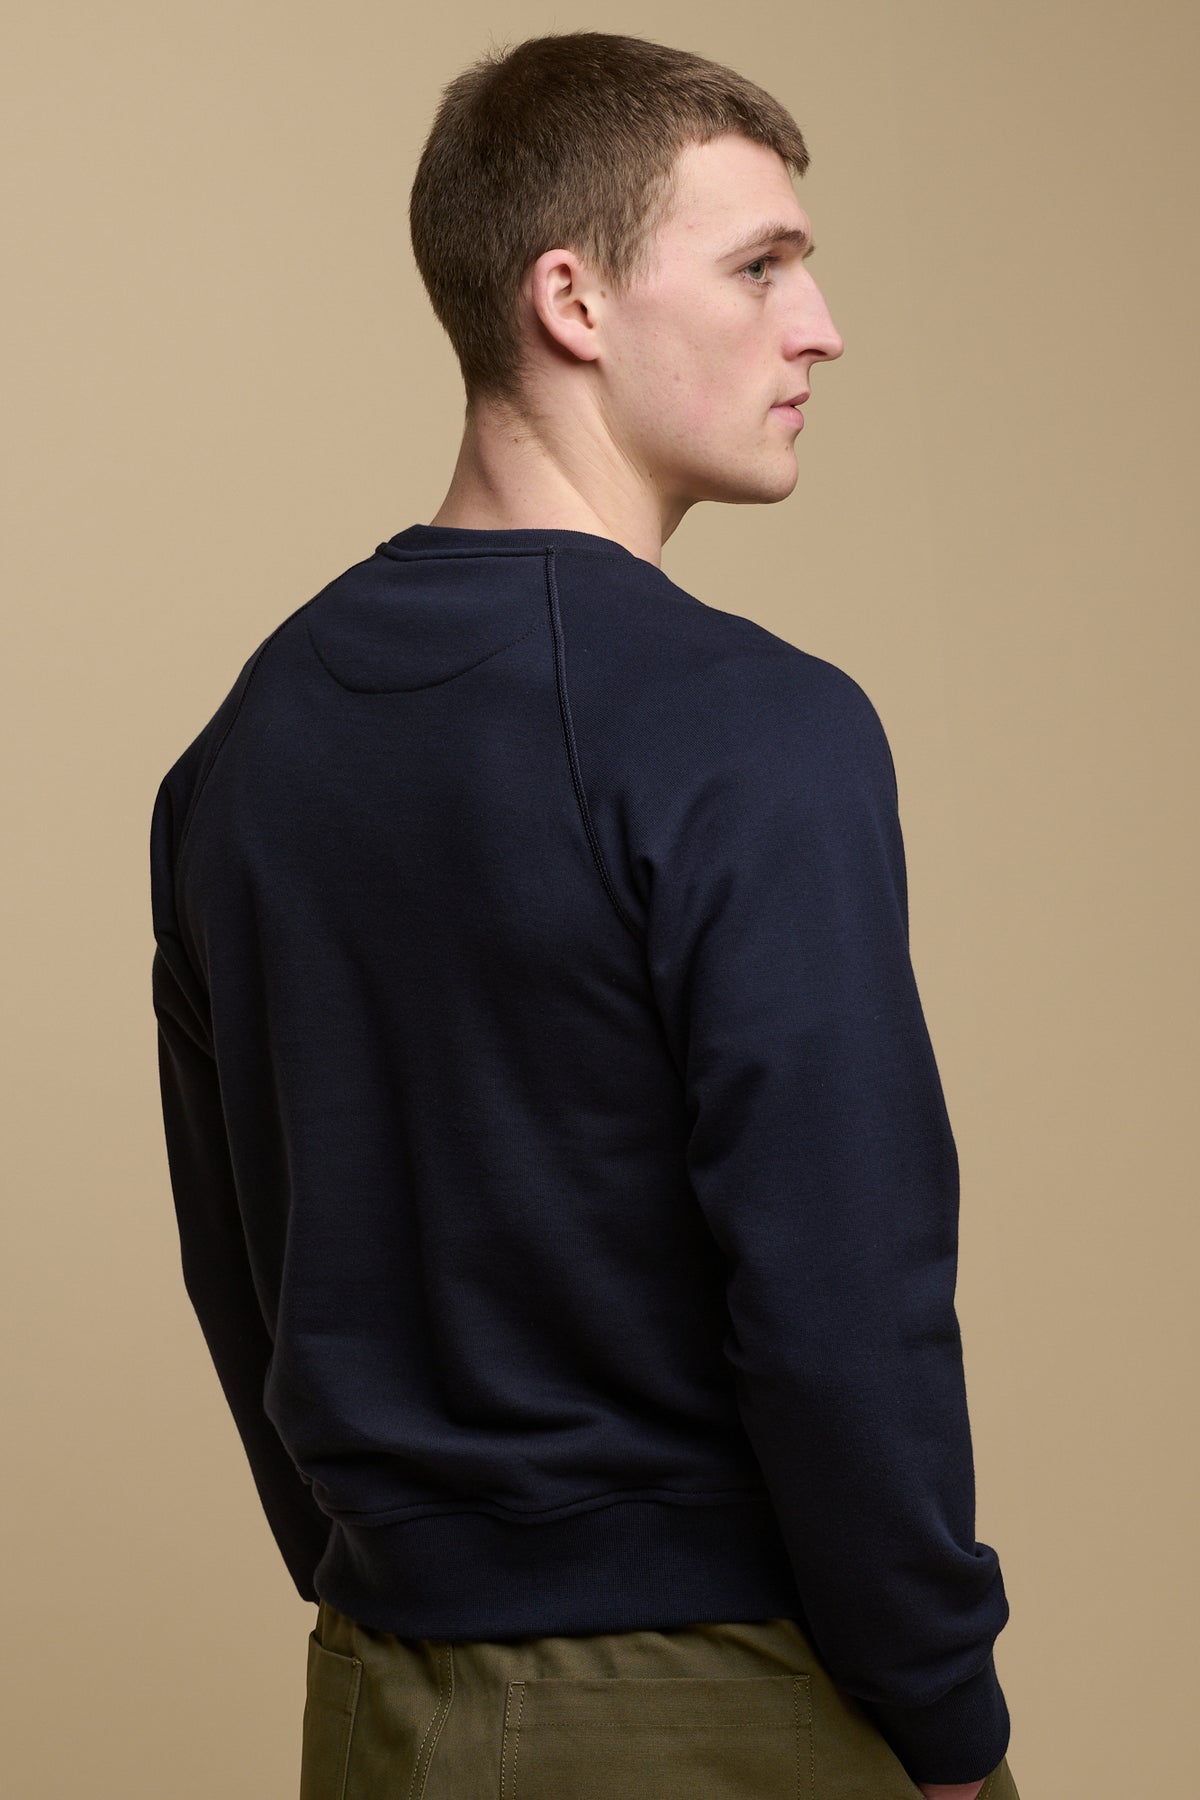 
            Thigh up of the back of male wearing logo raglan sweatshirt in navy